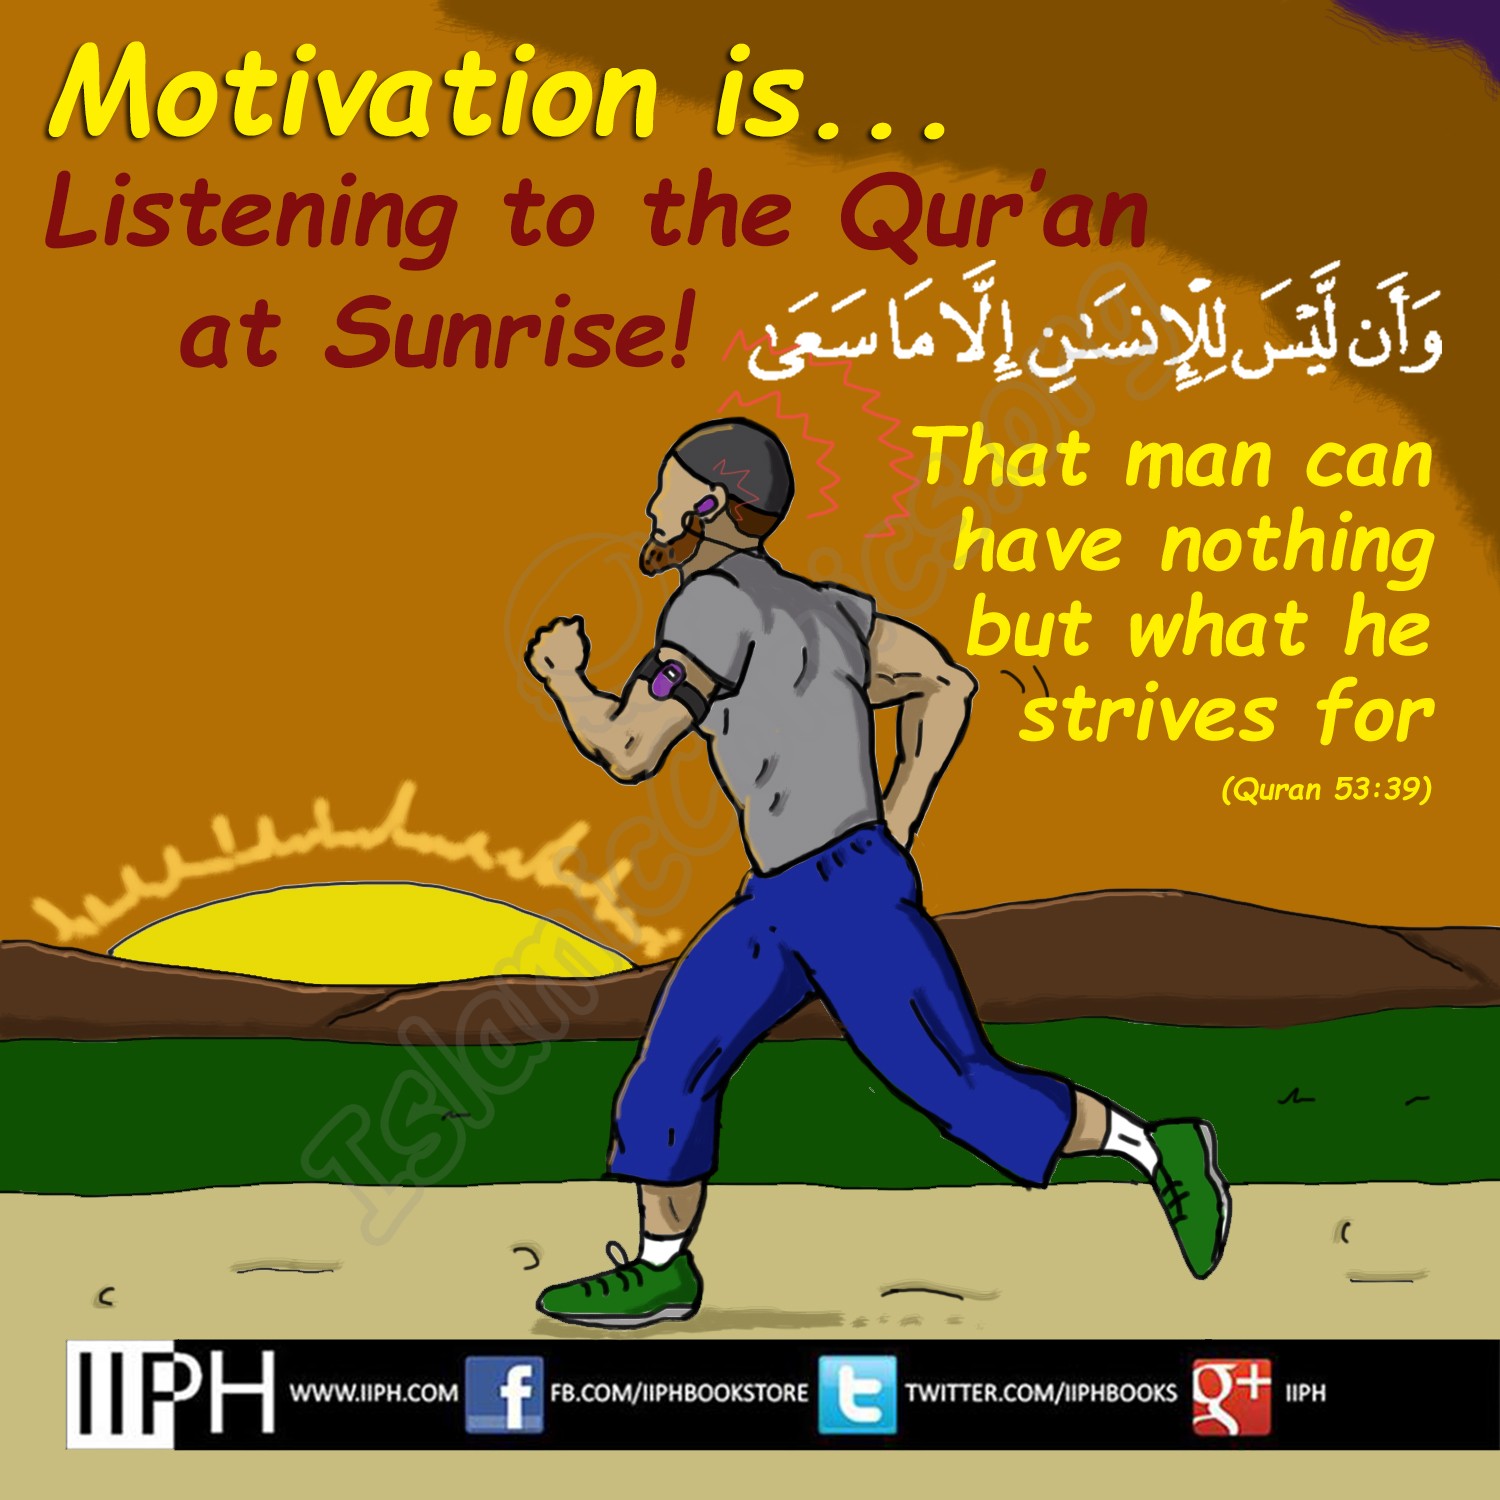 Motivation is Listening to Quran at Sunrise - Islamic Illustrations (Islamic Comics)